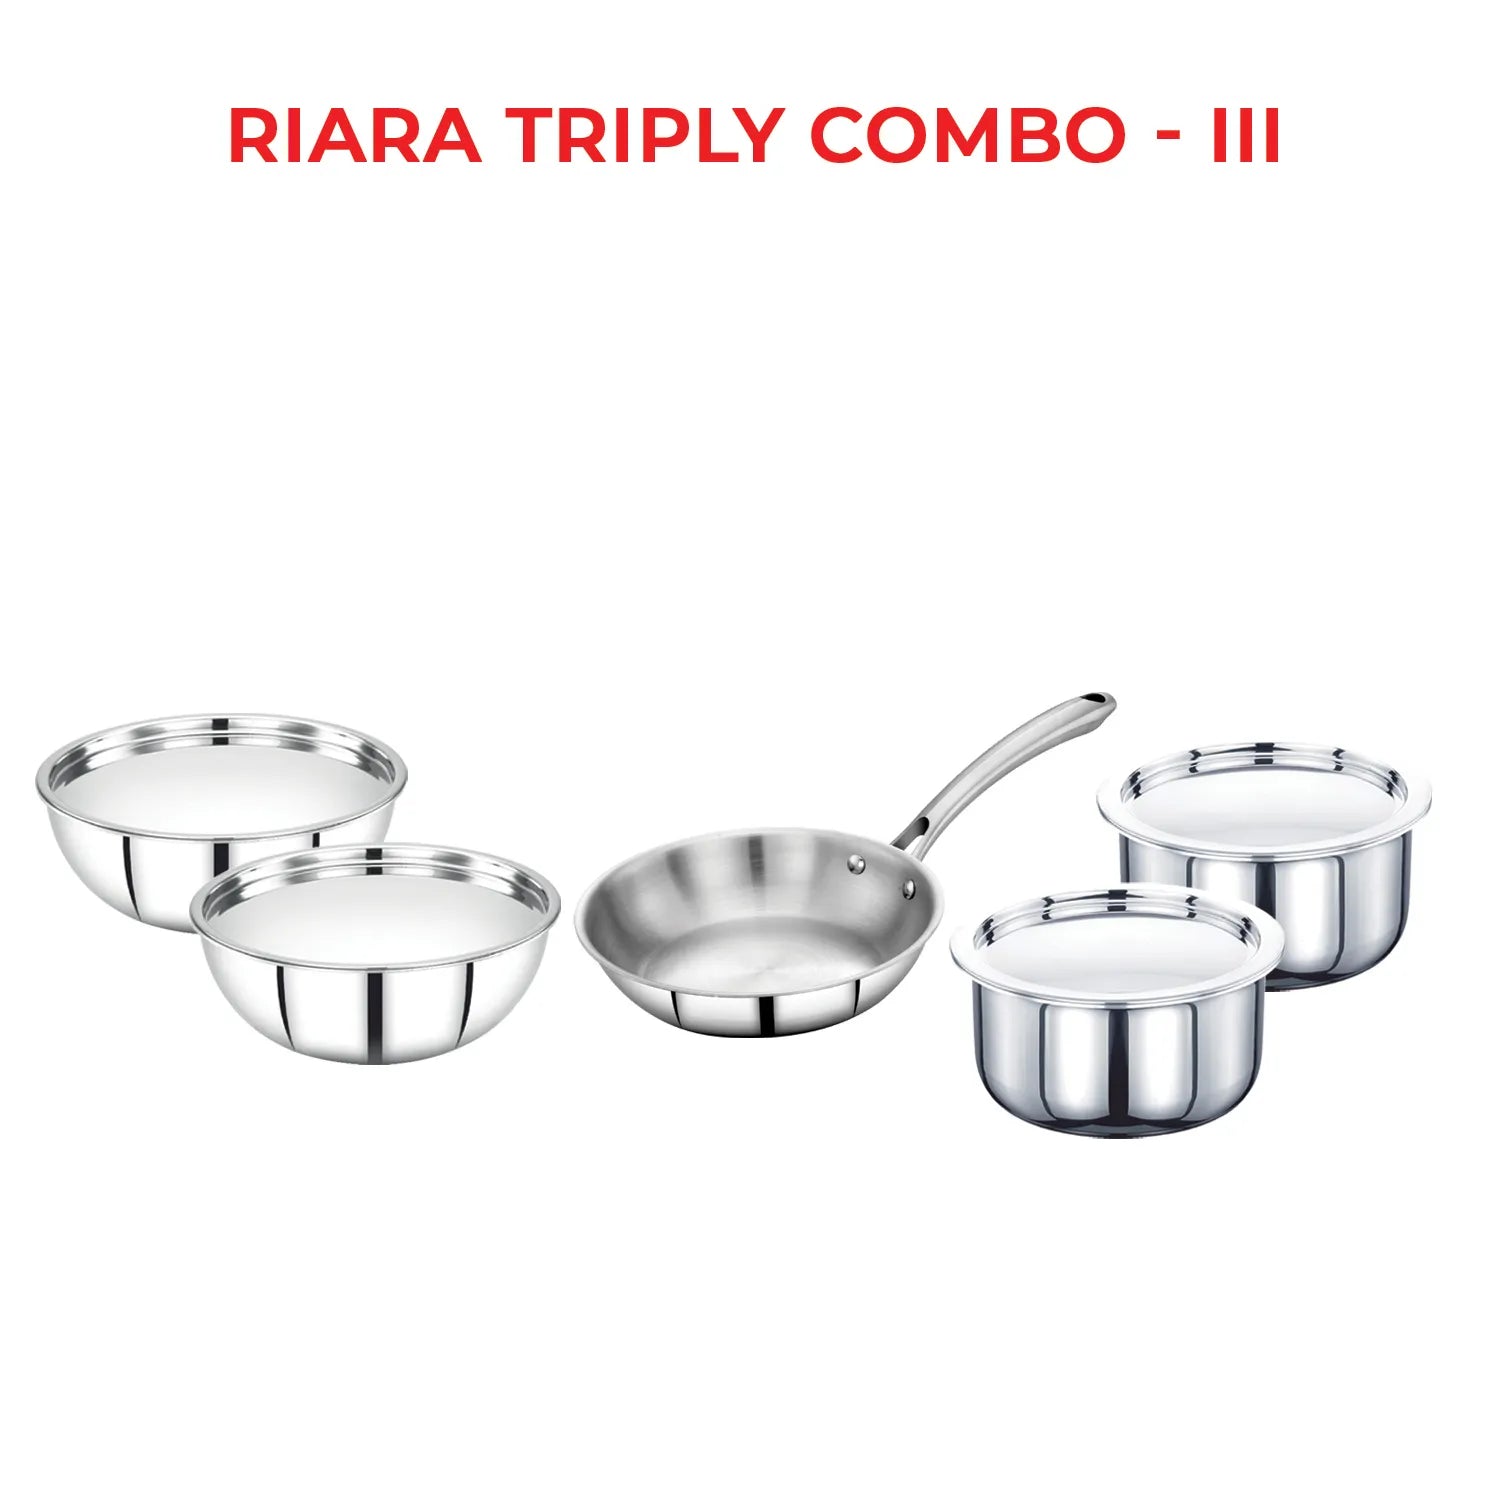 AVIAS Triply Combo III - Riara (Frypan 22cm + Talsa 20cm & 22cm + Tope 14cm & 16cm)